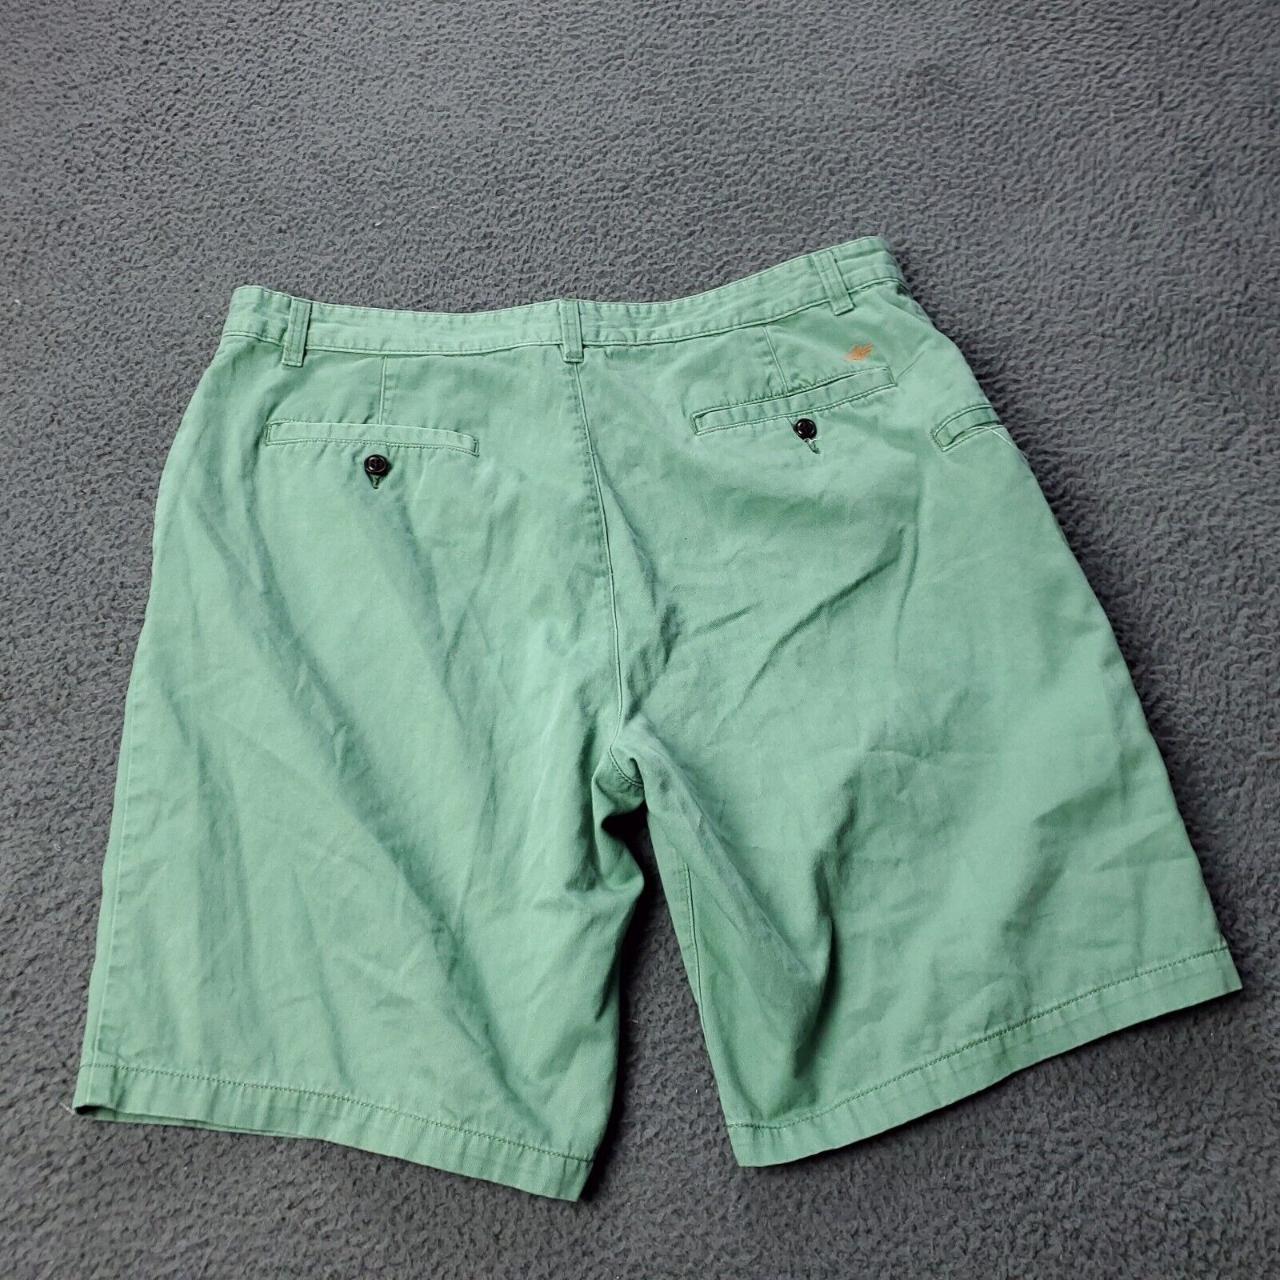 Dockers Men's Green Shorts (2)